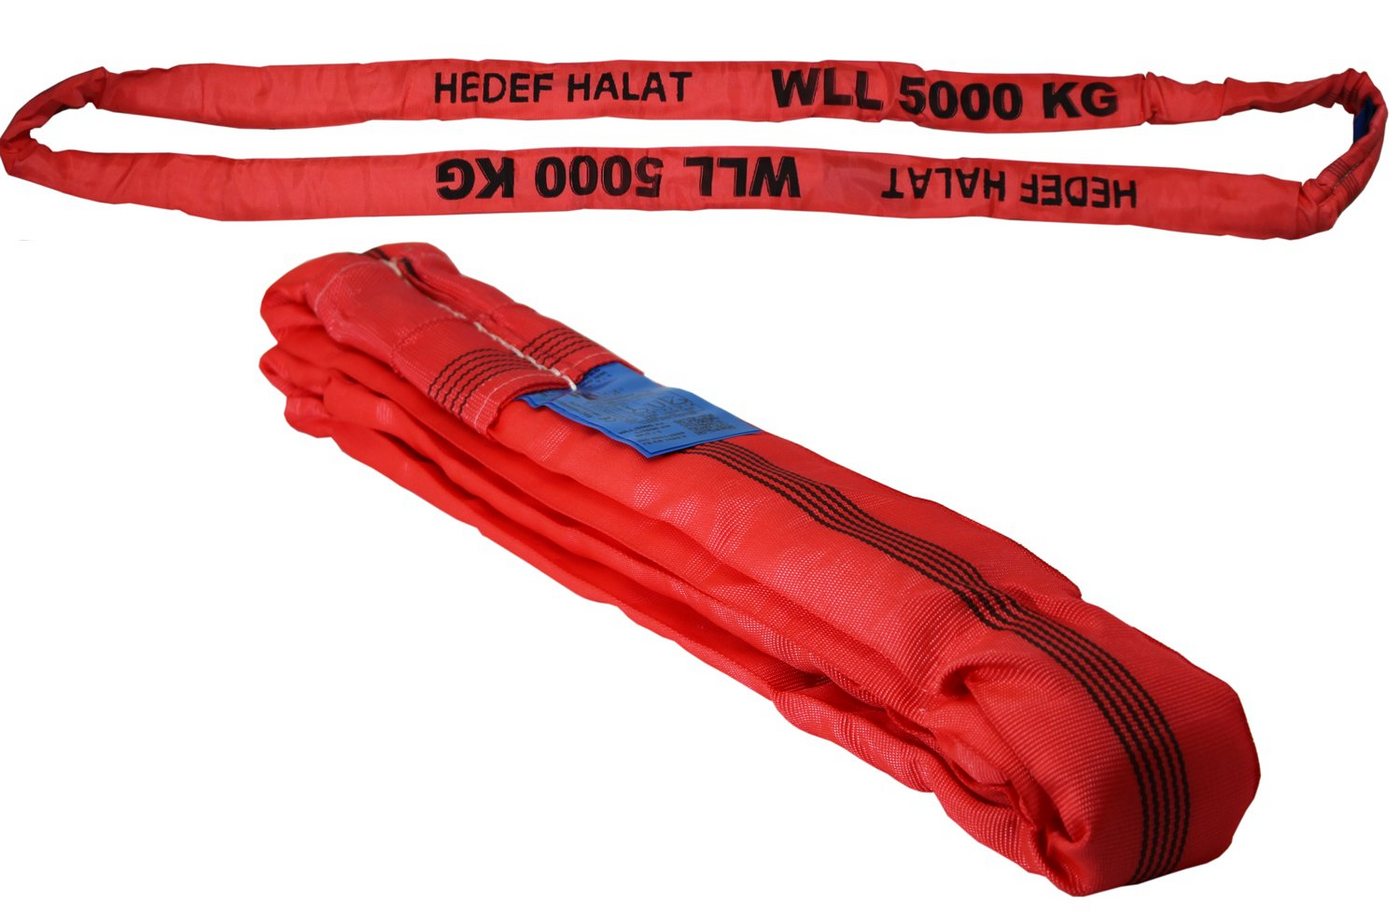 HEDEF HALAT Rundschlinge mit Einfachmantel 5 Tonnen 5 Meter SF: 7/1 DIN EN 1492-2 Hebeband, Rundschlingen Bandschlinge Hebegurt 5 m (umfang 10 m) von HEDEF HALAT